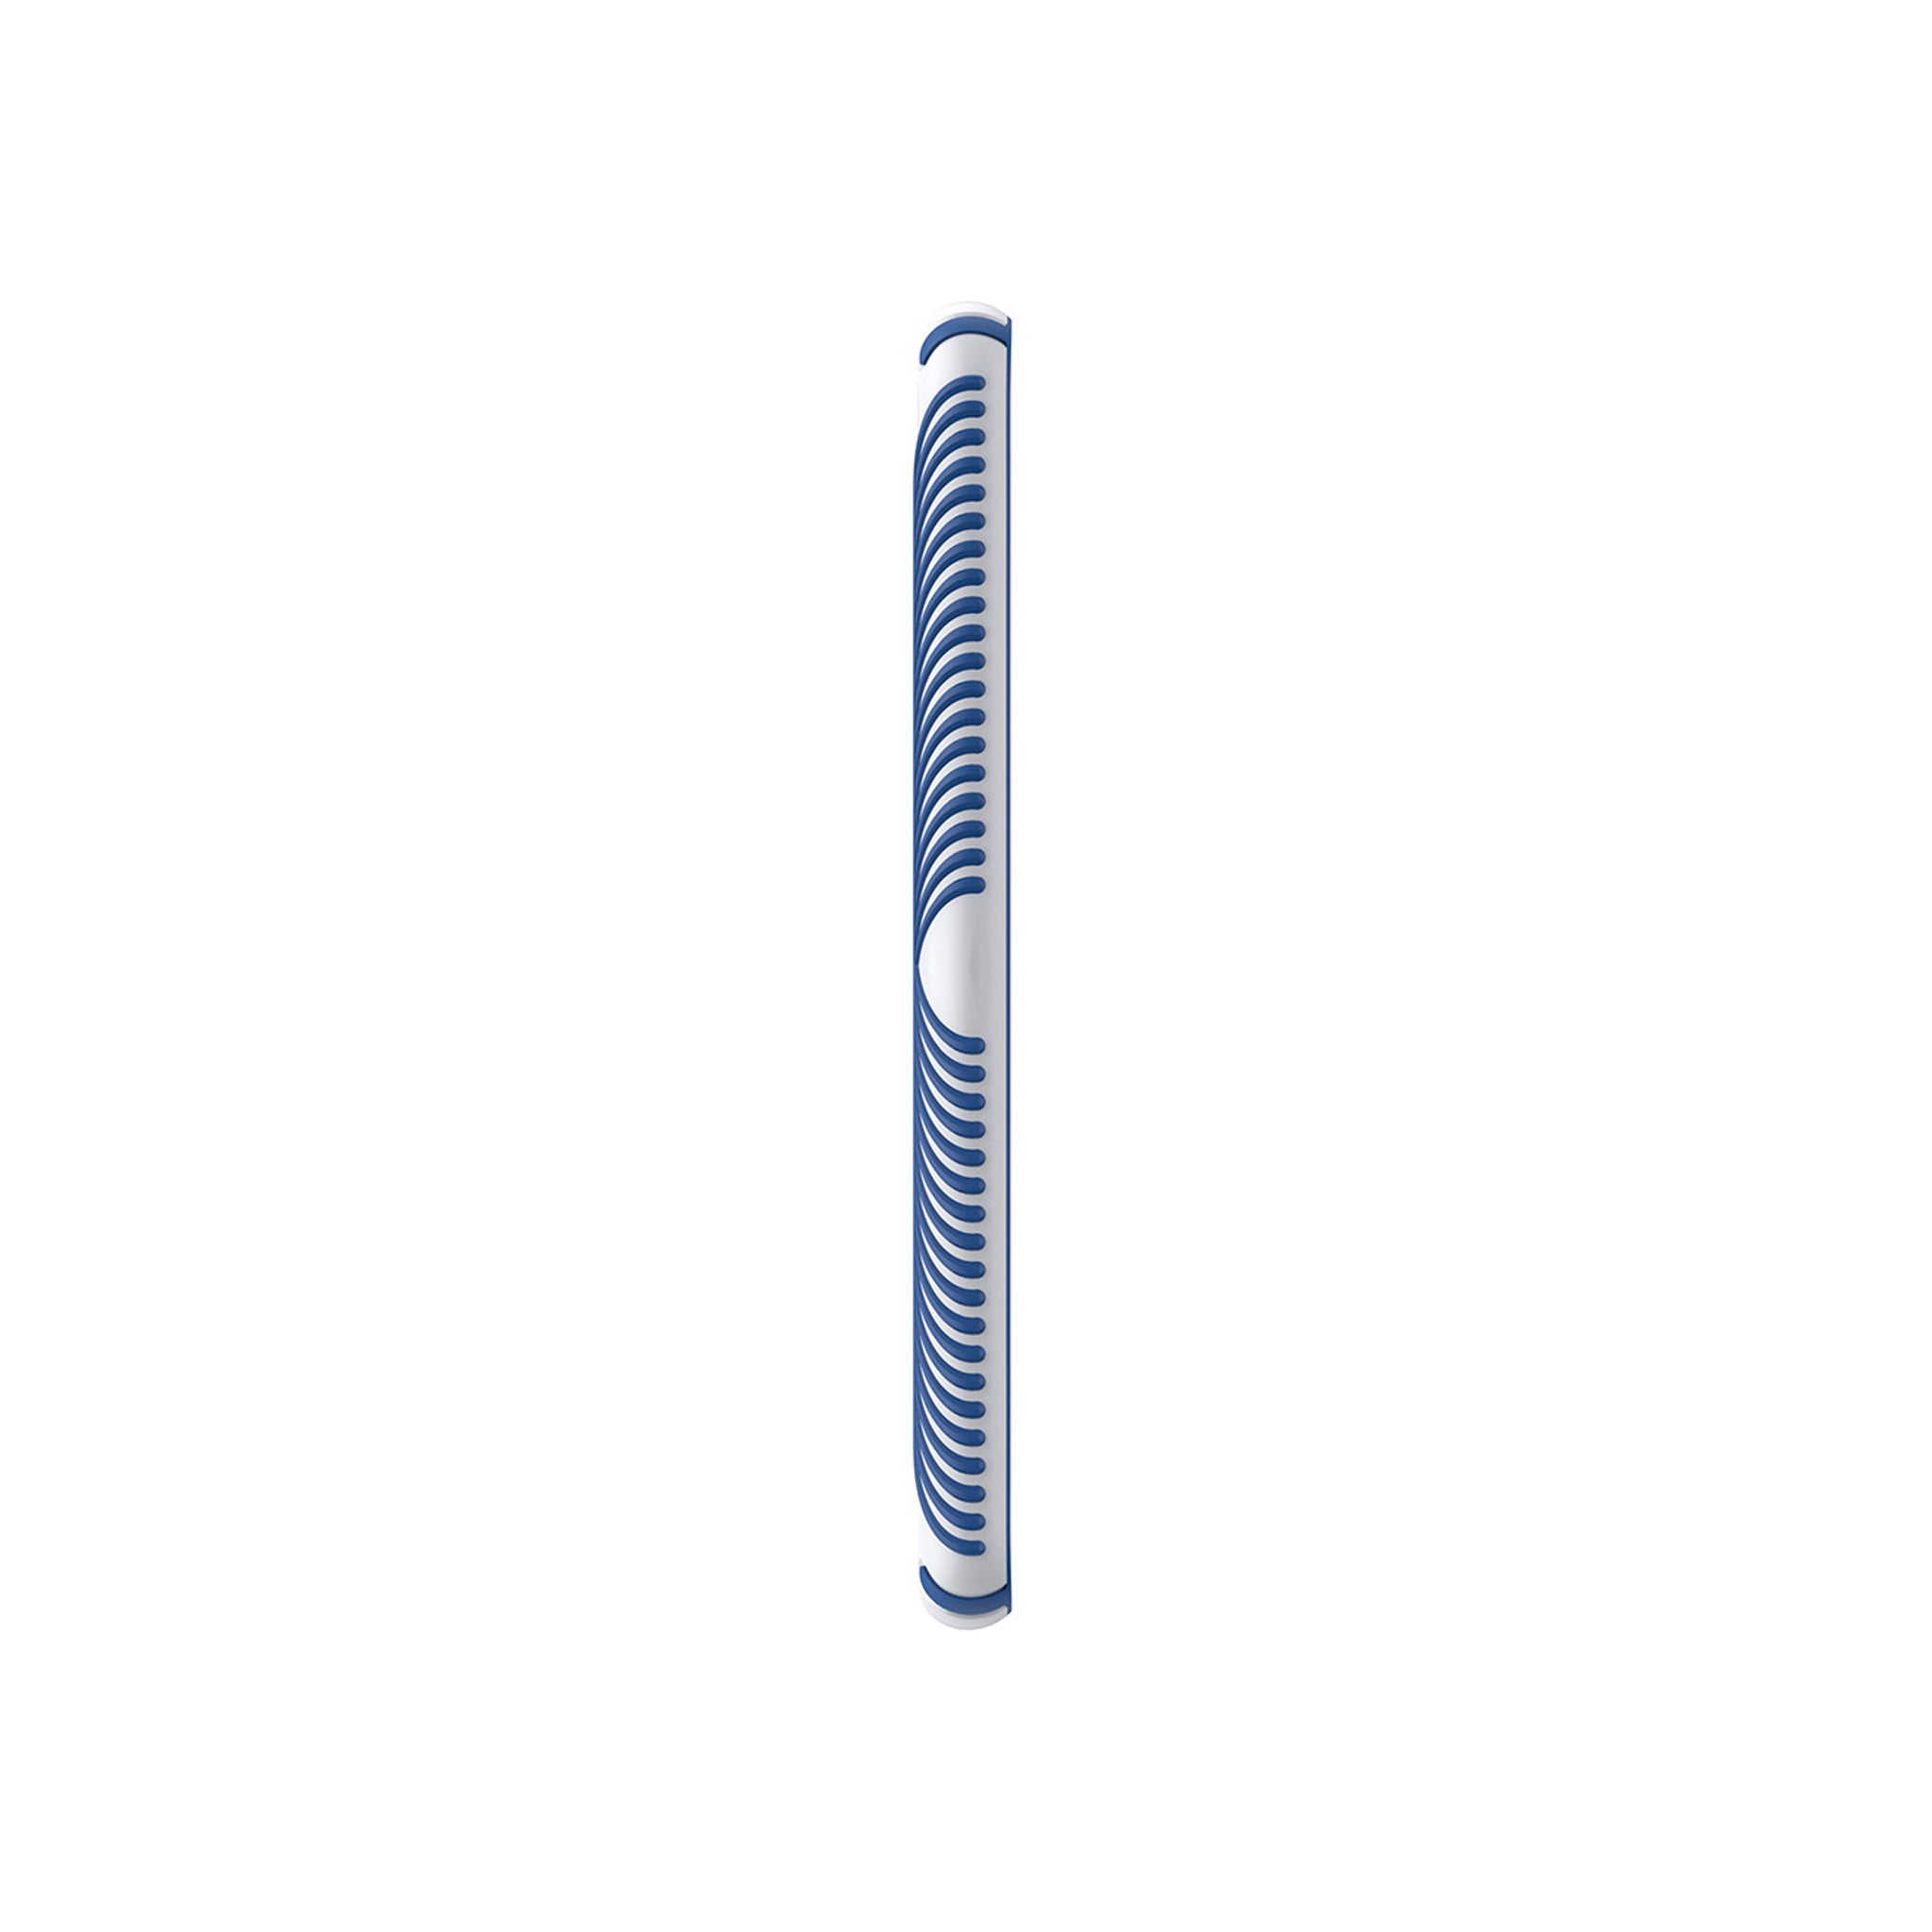 Speck - Presidio Grip Case For Samsung Galaxy A20 - Microchip Gray And Ballpoint Blue